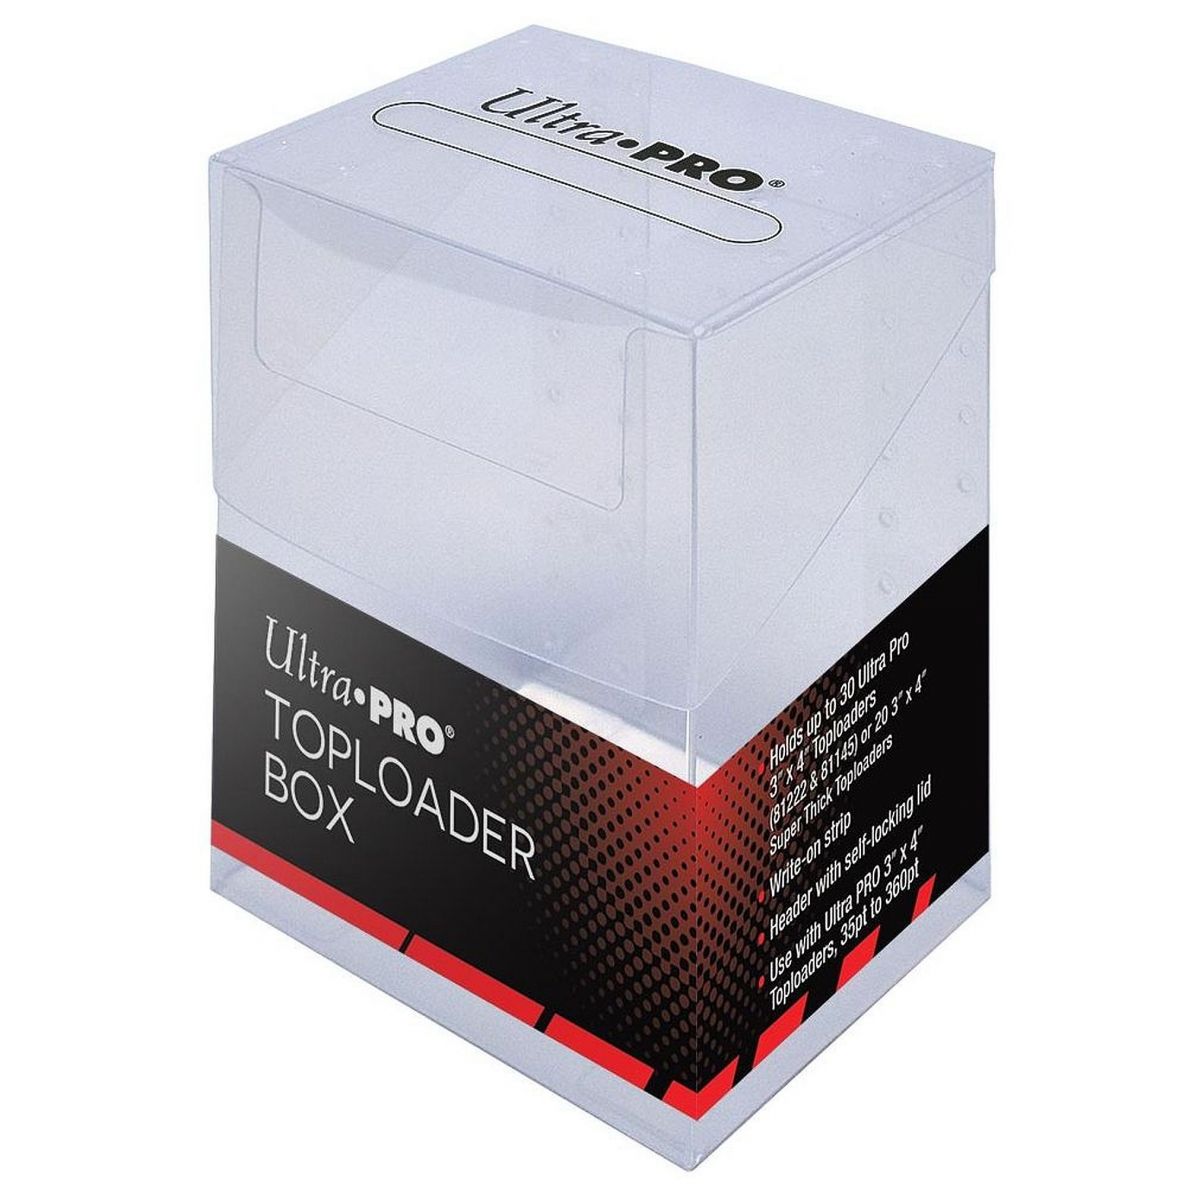 Item Ultra Pro - Deck Box - Top loader Box